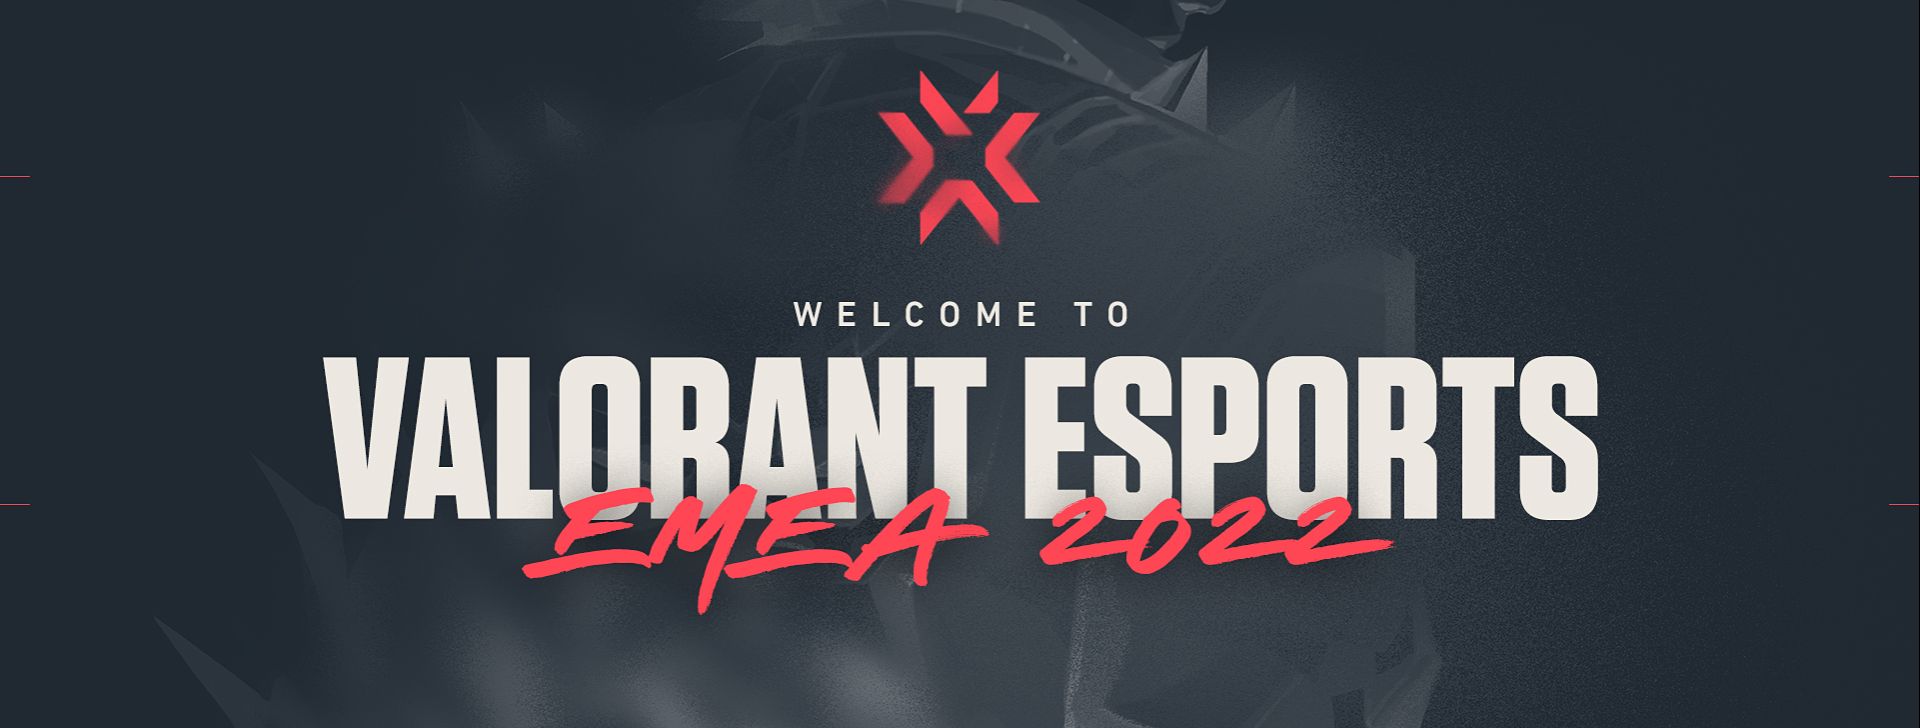 Welcome to VALORANT Esports EMEA 2022